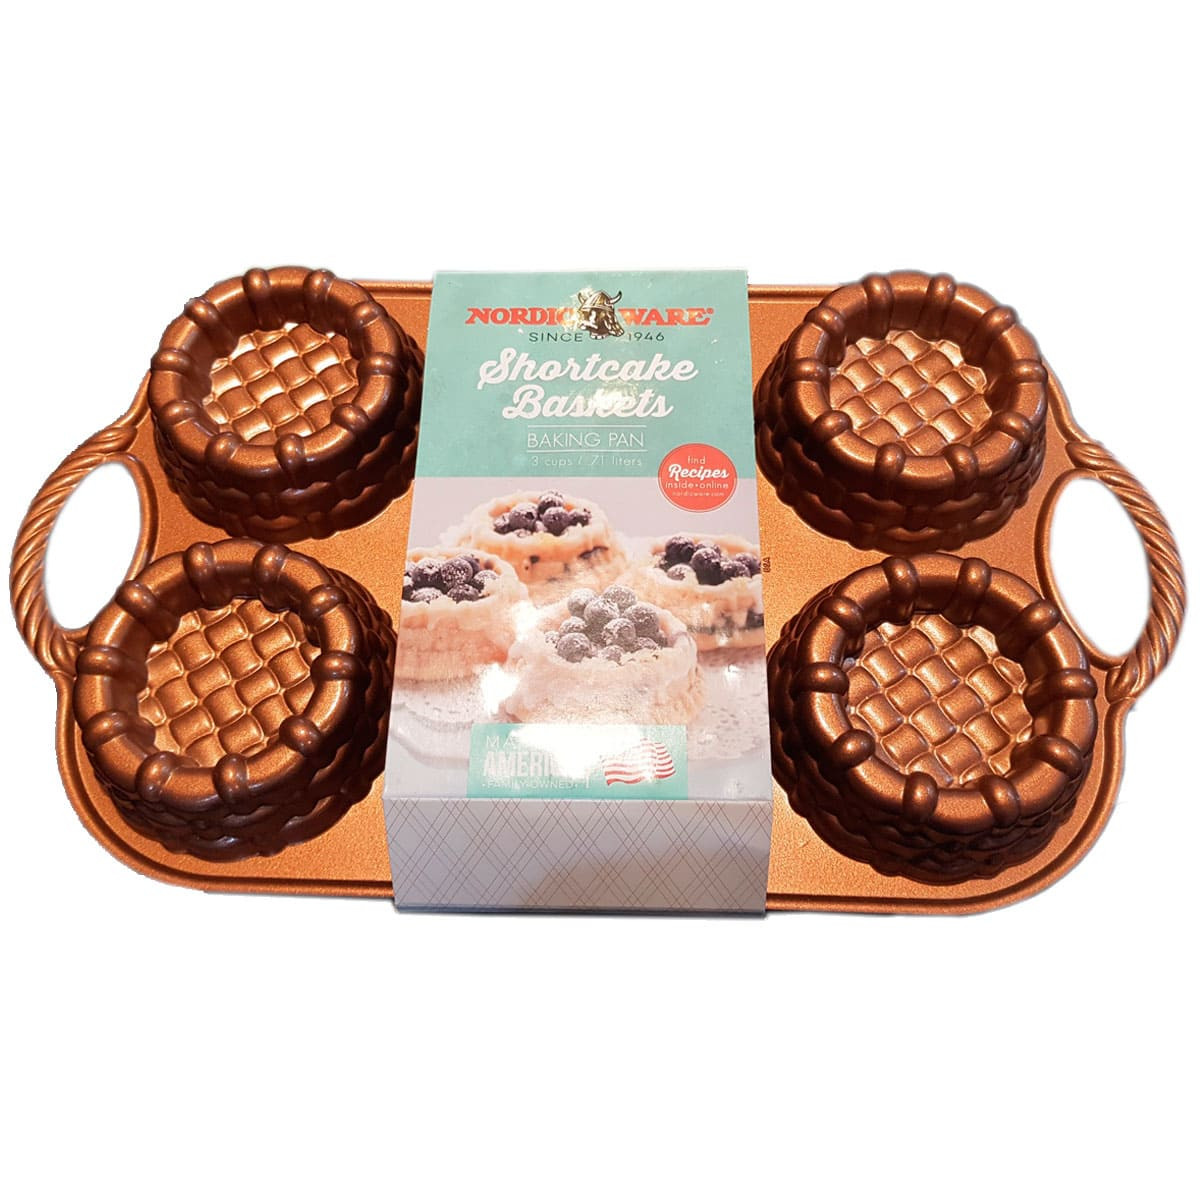 Mini Formas Nordic Ware Shortcake Baskets 